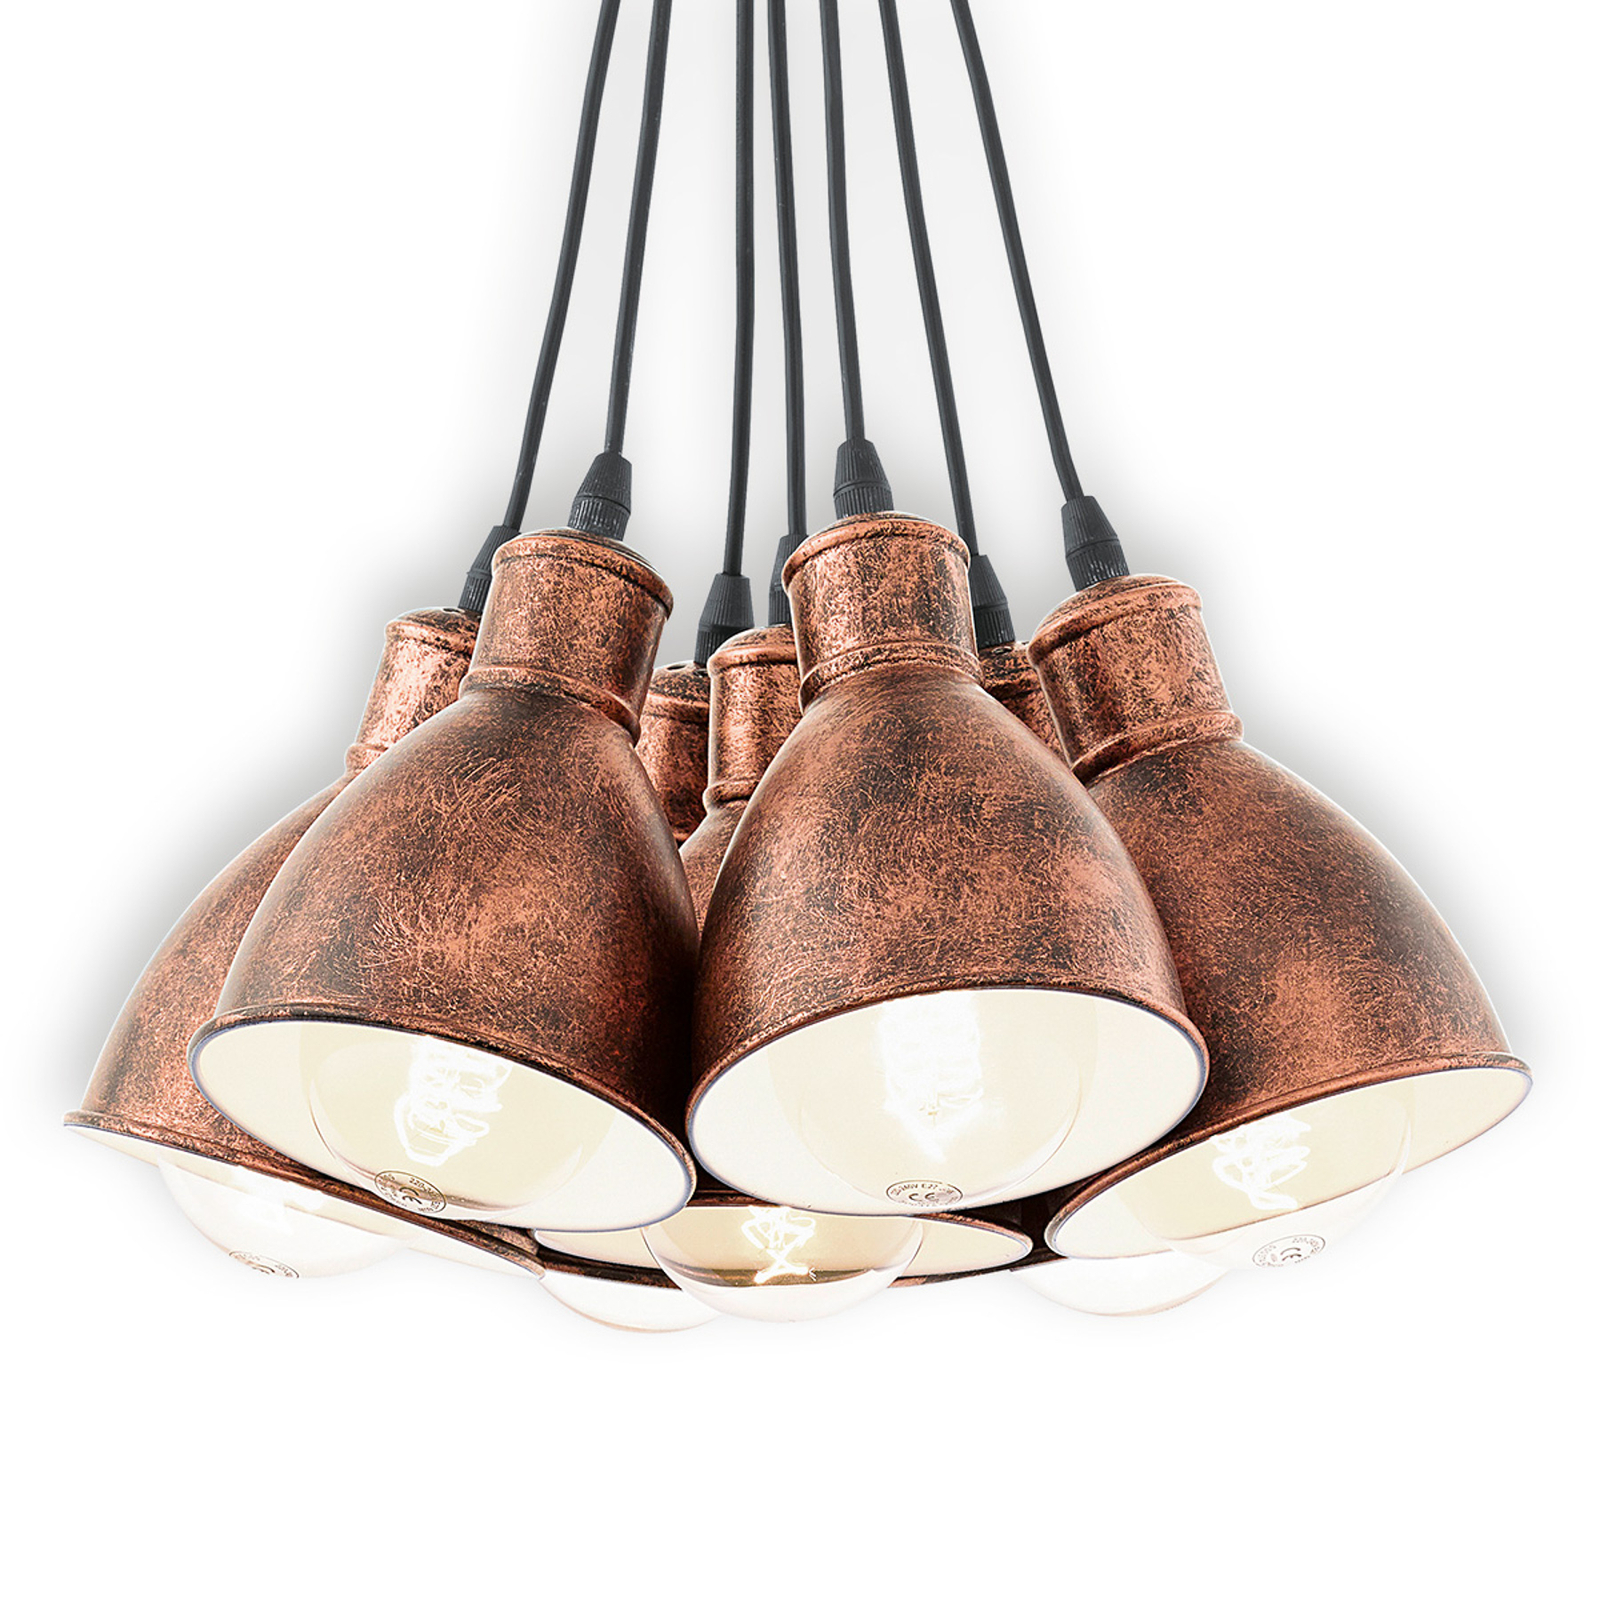 Pendant light Priddy 1, seven-bulb, antique copper